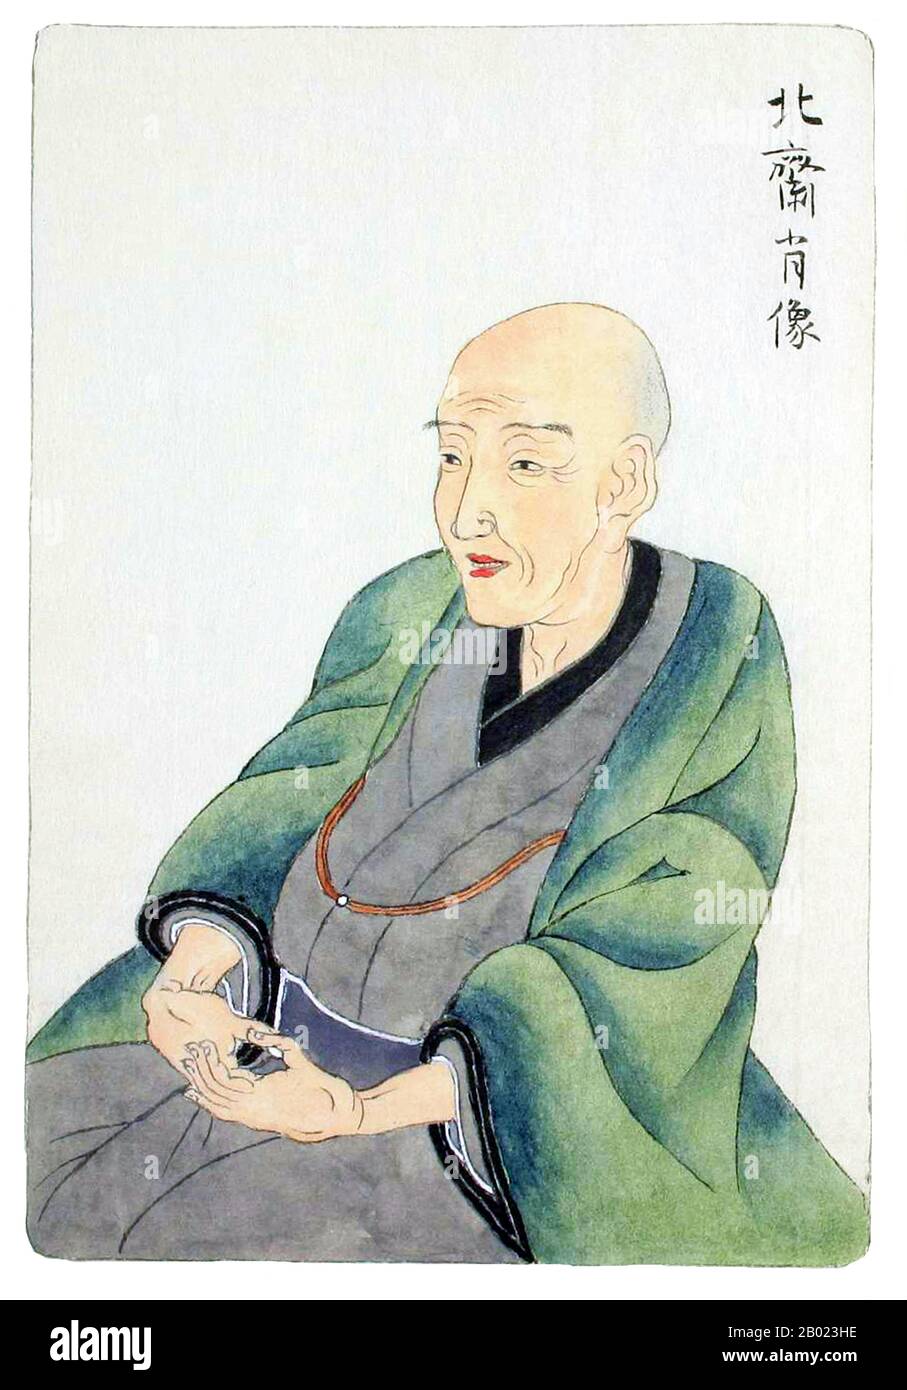 Katsushika Hokusai (葛飾 北斎, 31 de octubre de 1760 – 10 de mayo de 1849) fue  un artista japonés, pintor ukiyo-e y grabador del período Edo. Fue  influenciado por pintores como Sesshu,